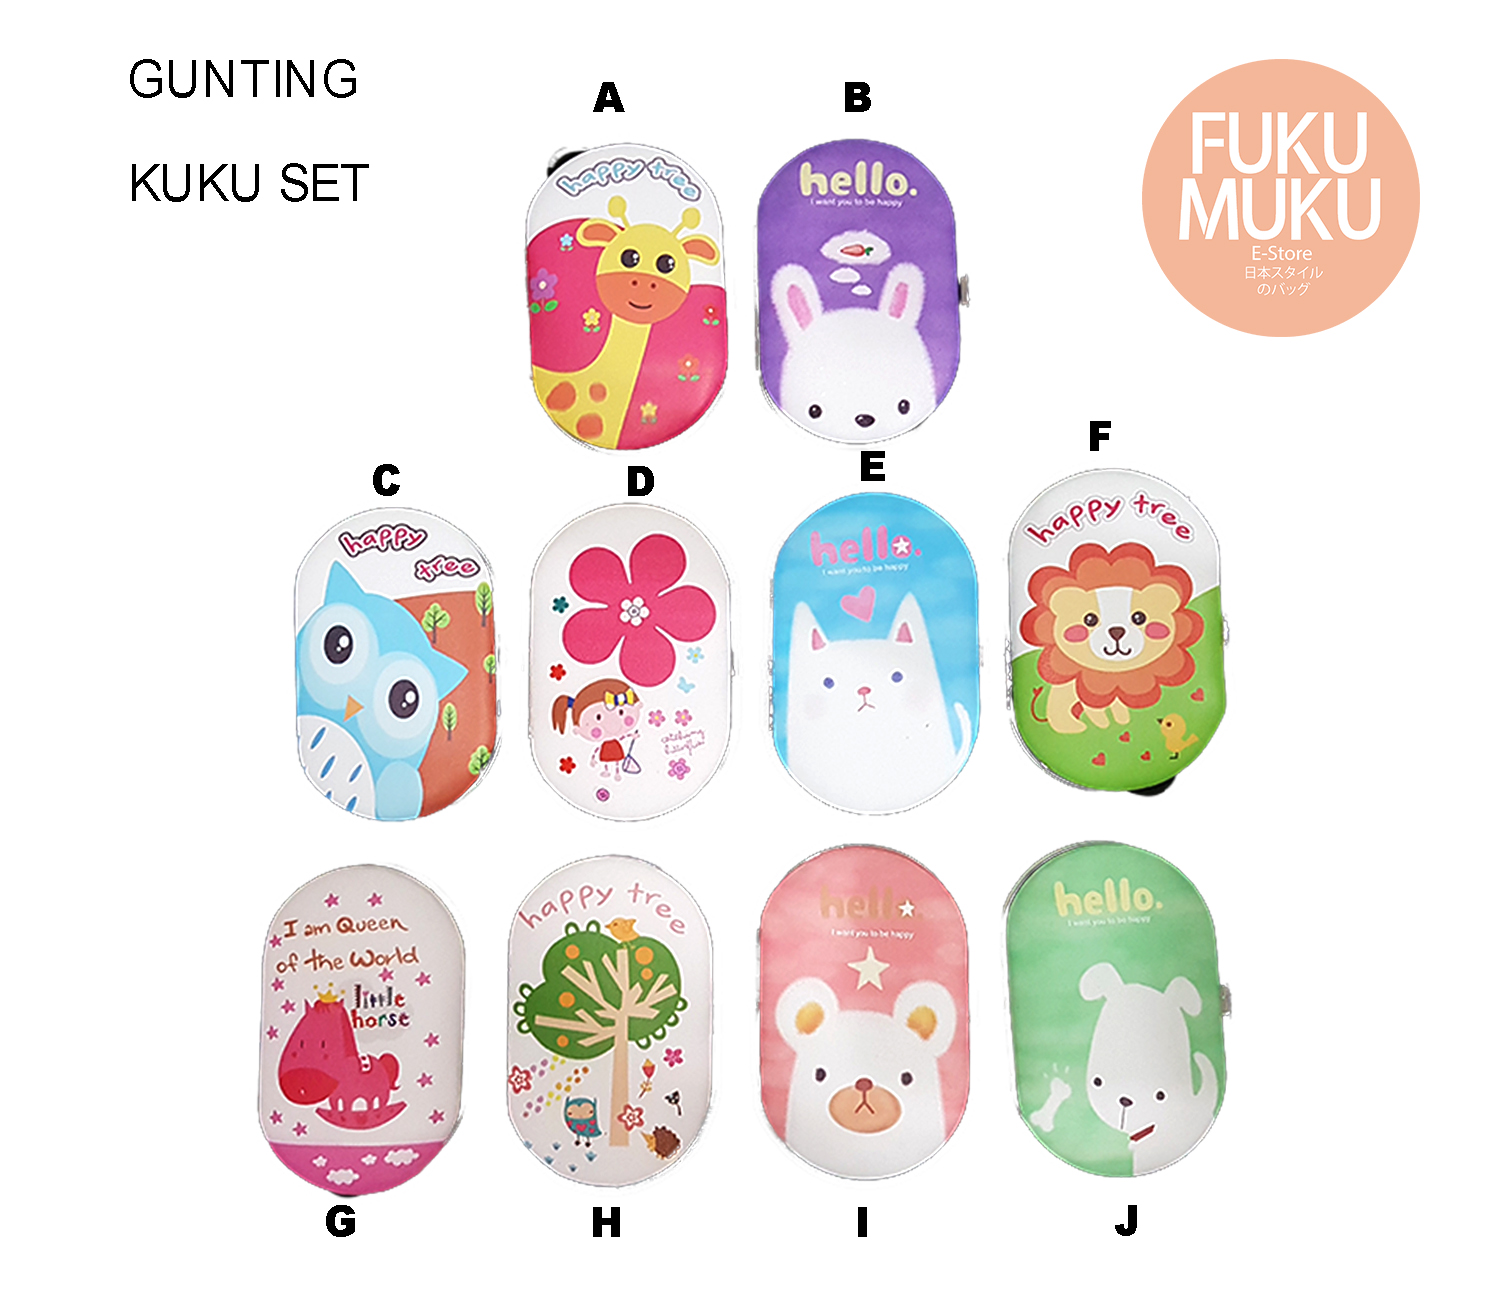 Gunting Kuku Set Import Cute Motif Manicure Pedicure Set